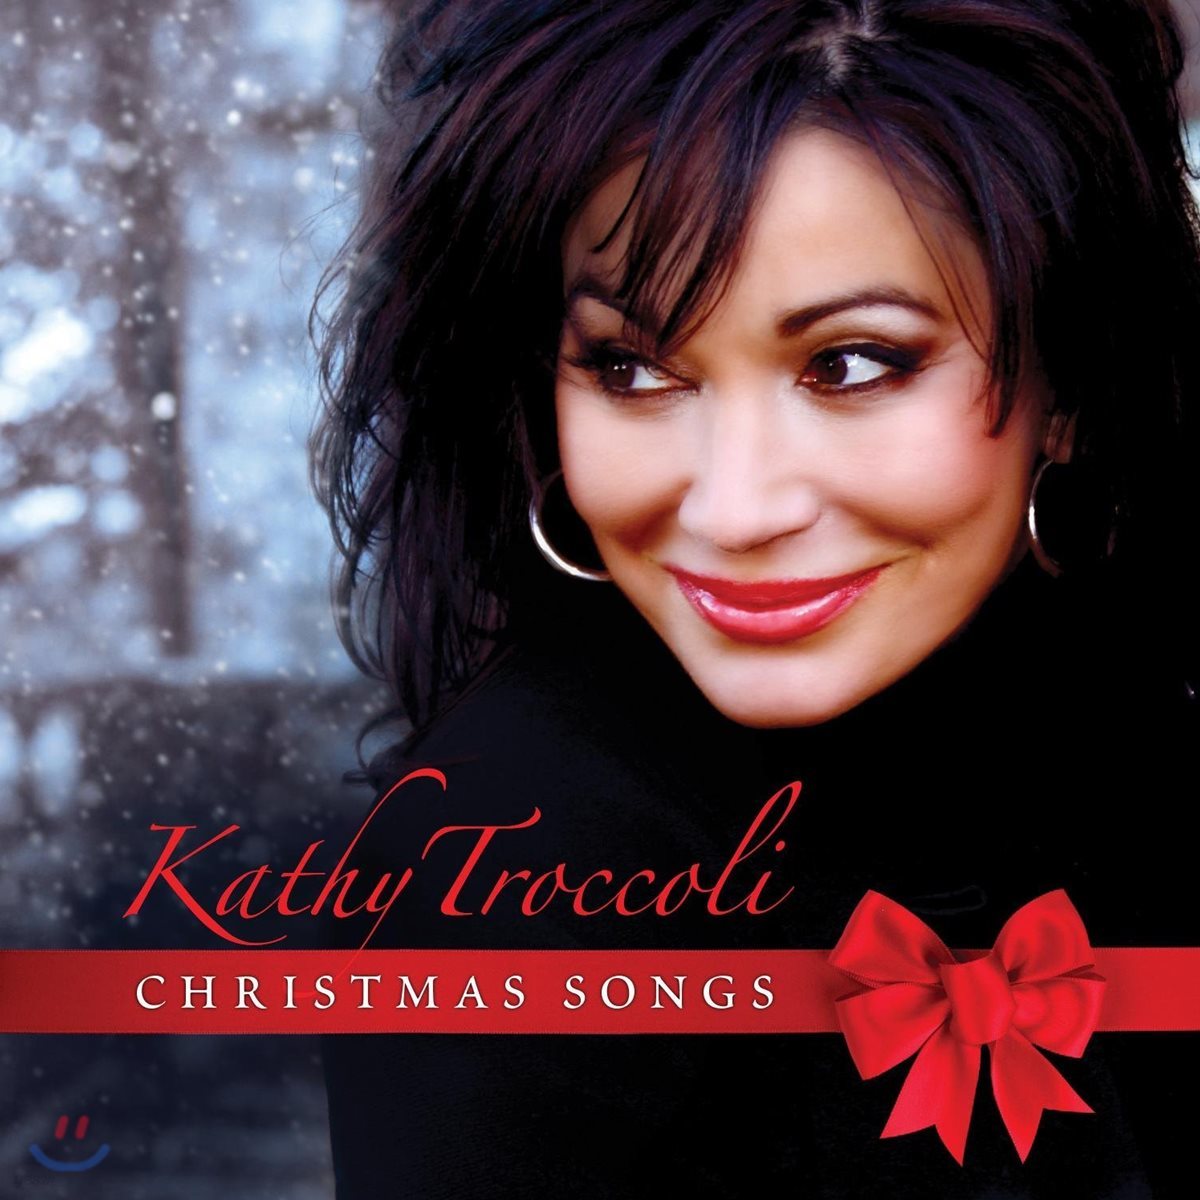 Kathy Troccoli - Christmas Songs 캐시 트로콜리 크리스마스 노래